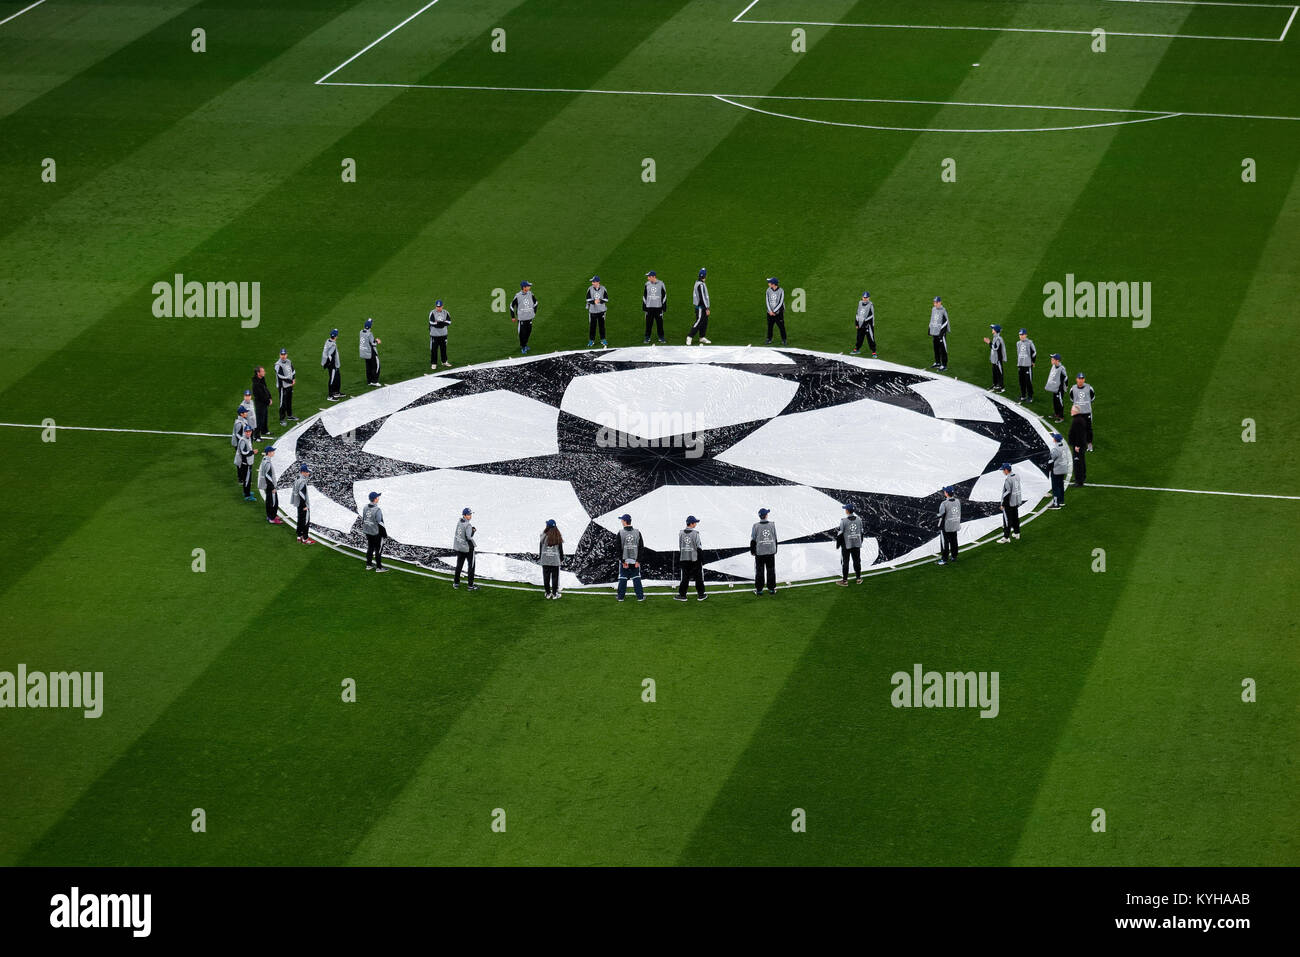 MADRID, SPAIN - FEBRUARY 17, 2017: top view of guys around Uefa Champions League logo on the grass of Santiago Bernabeu soccer stadium Stock Photo